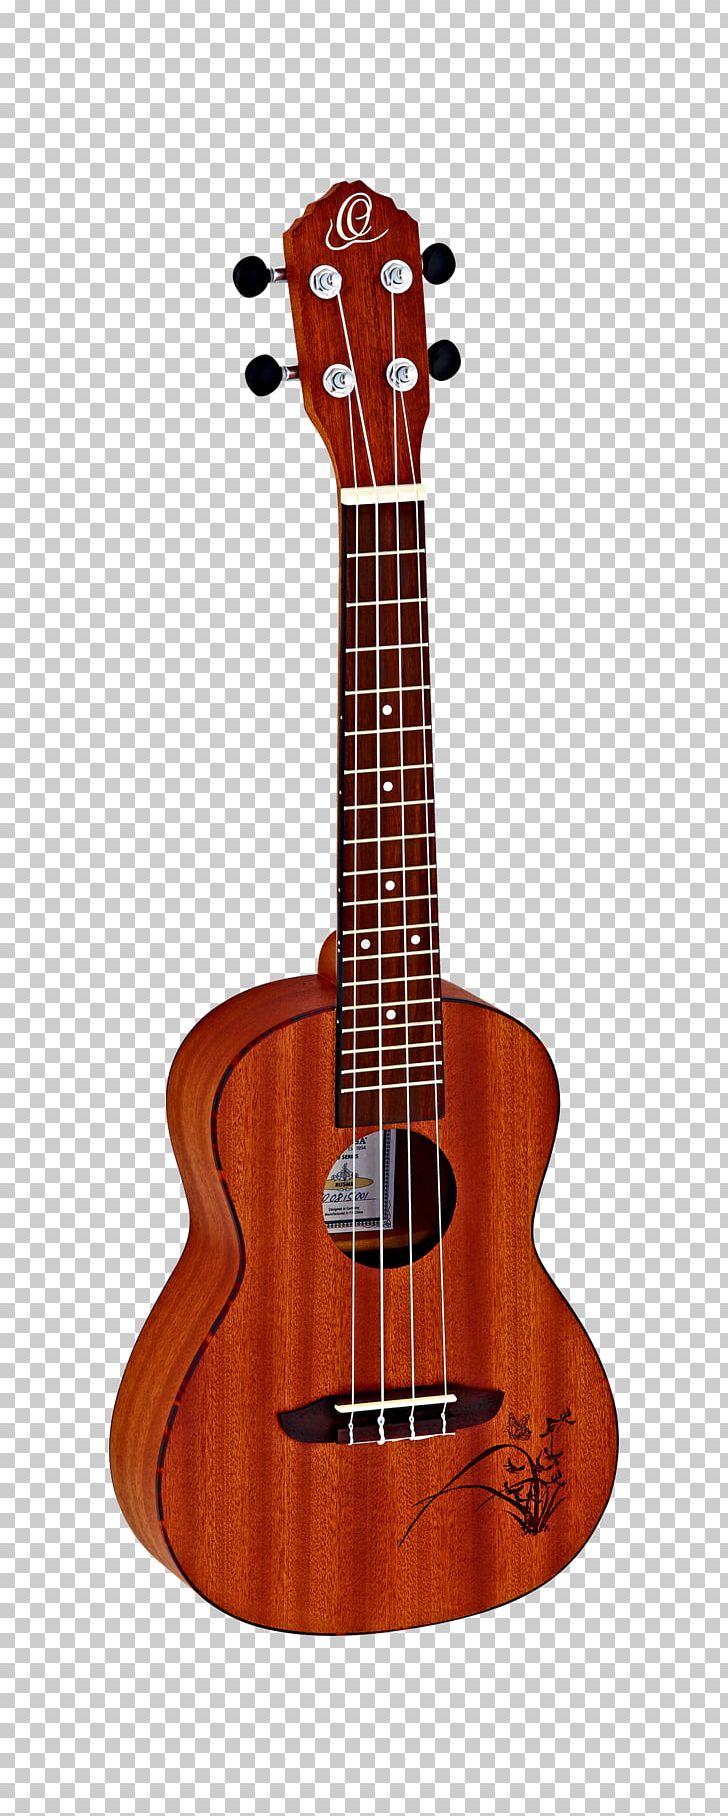 Ukulele Classical Guitar Steel-string Acoustic Guitar Flamenco Guitar PNG, Clipart, Amancio Ortega, Classical Guitar, Cuatro, Guitar Accessory, People Free PNG Download